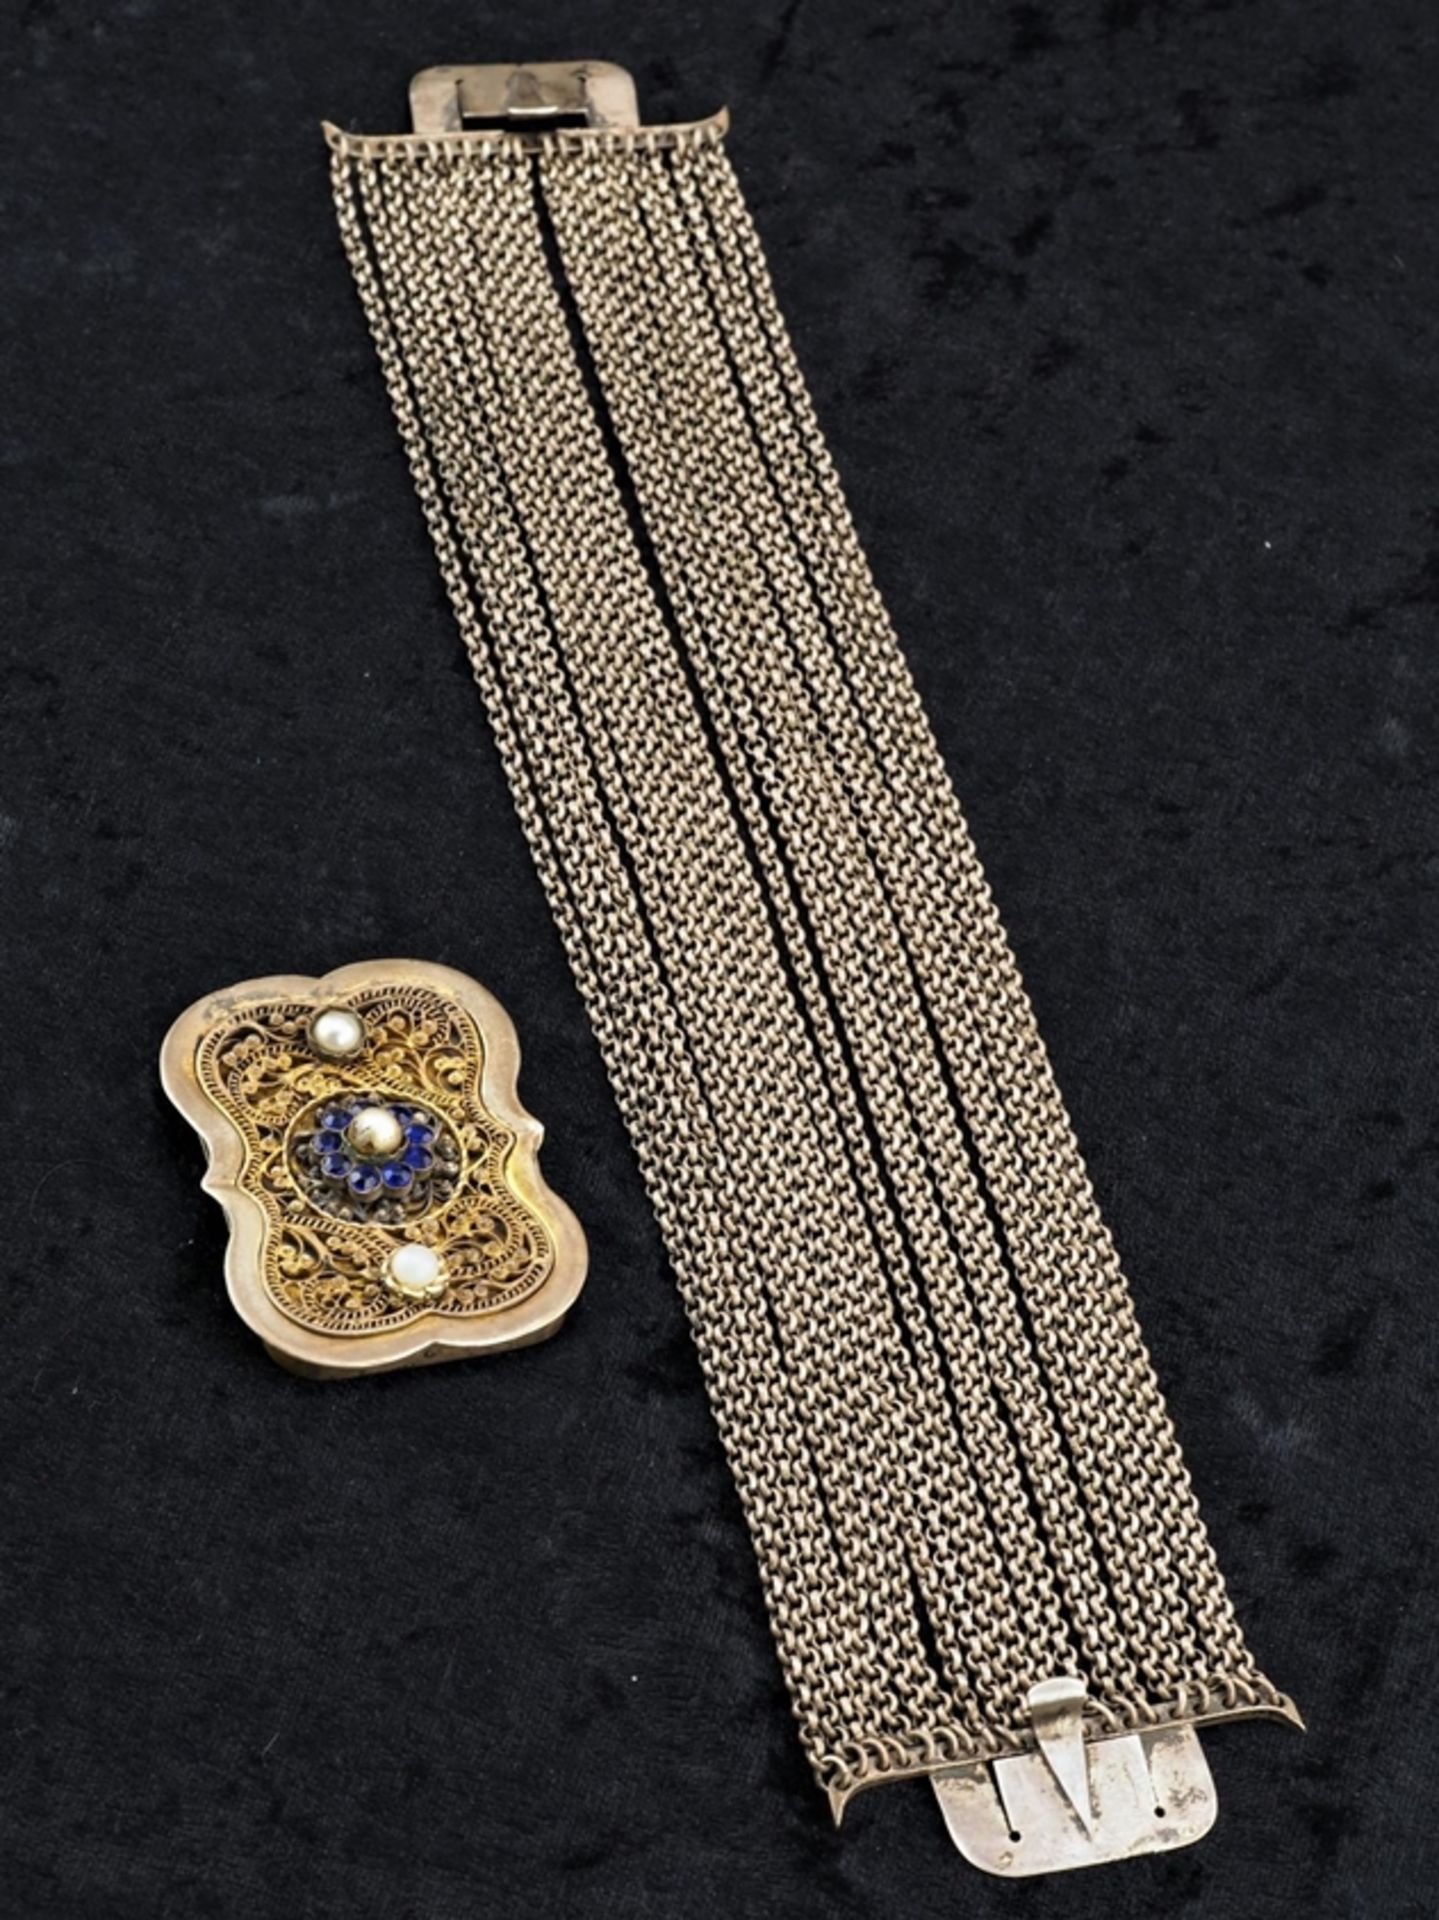 Biedermeier choker necklace around 1850, probably imperial Austria - Image 4 of 7